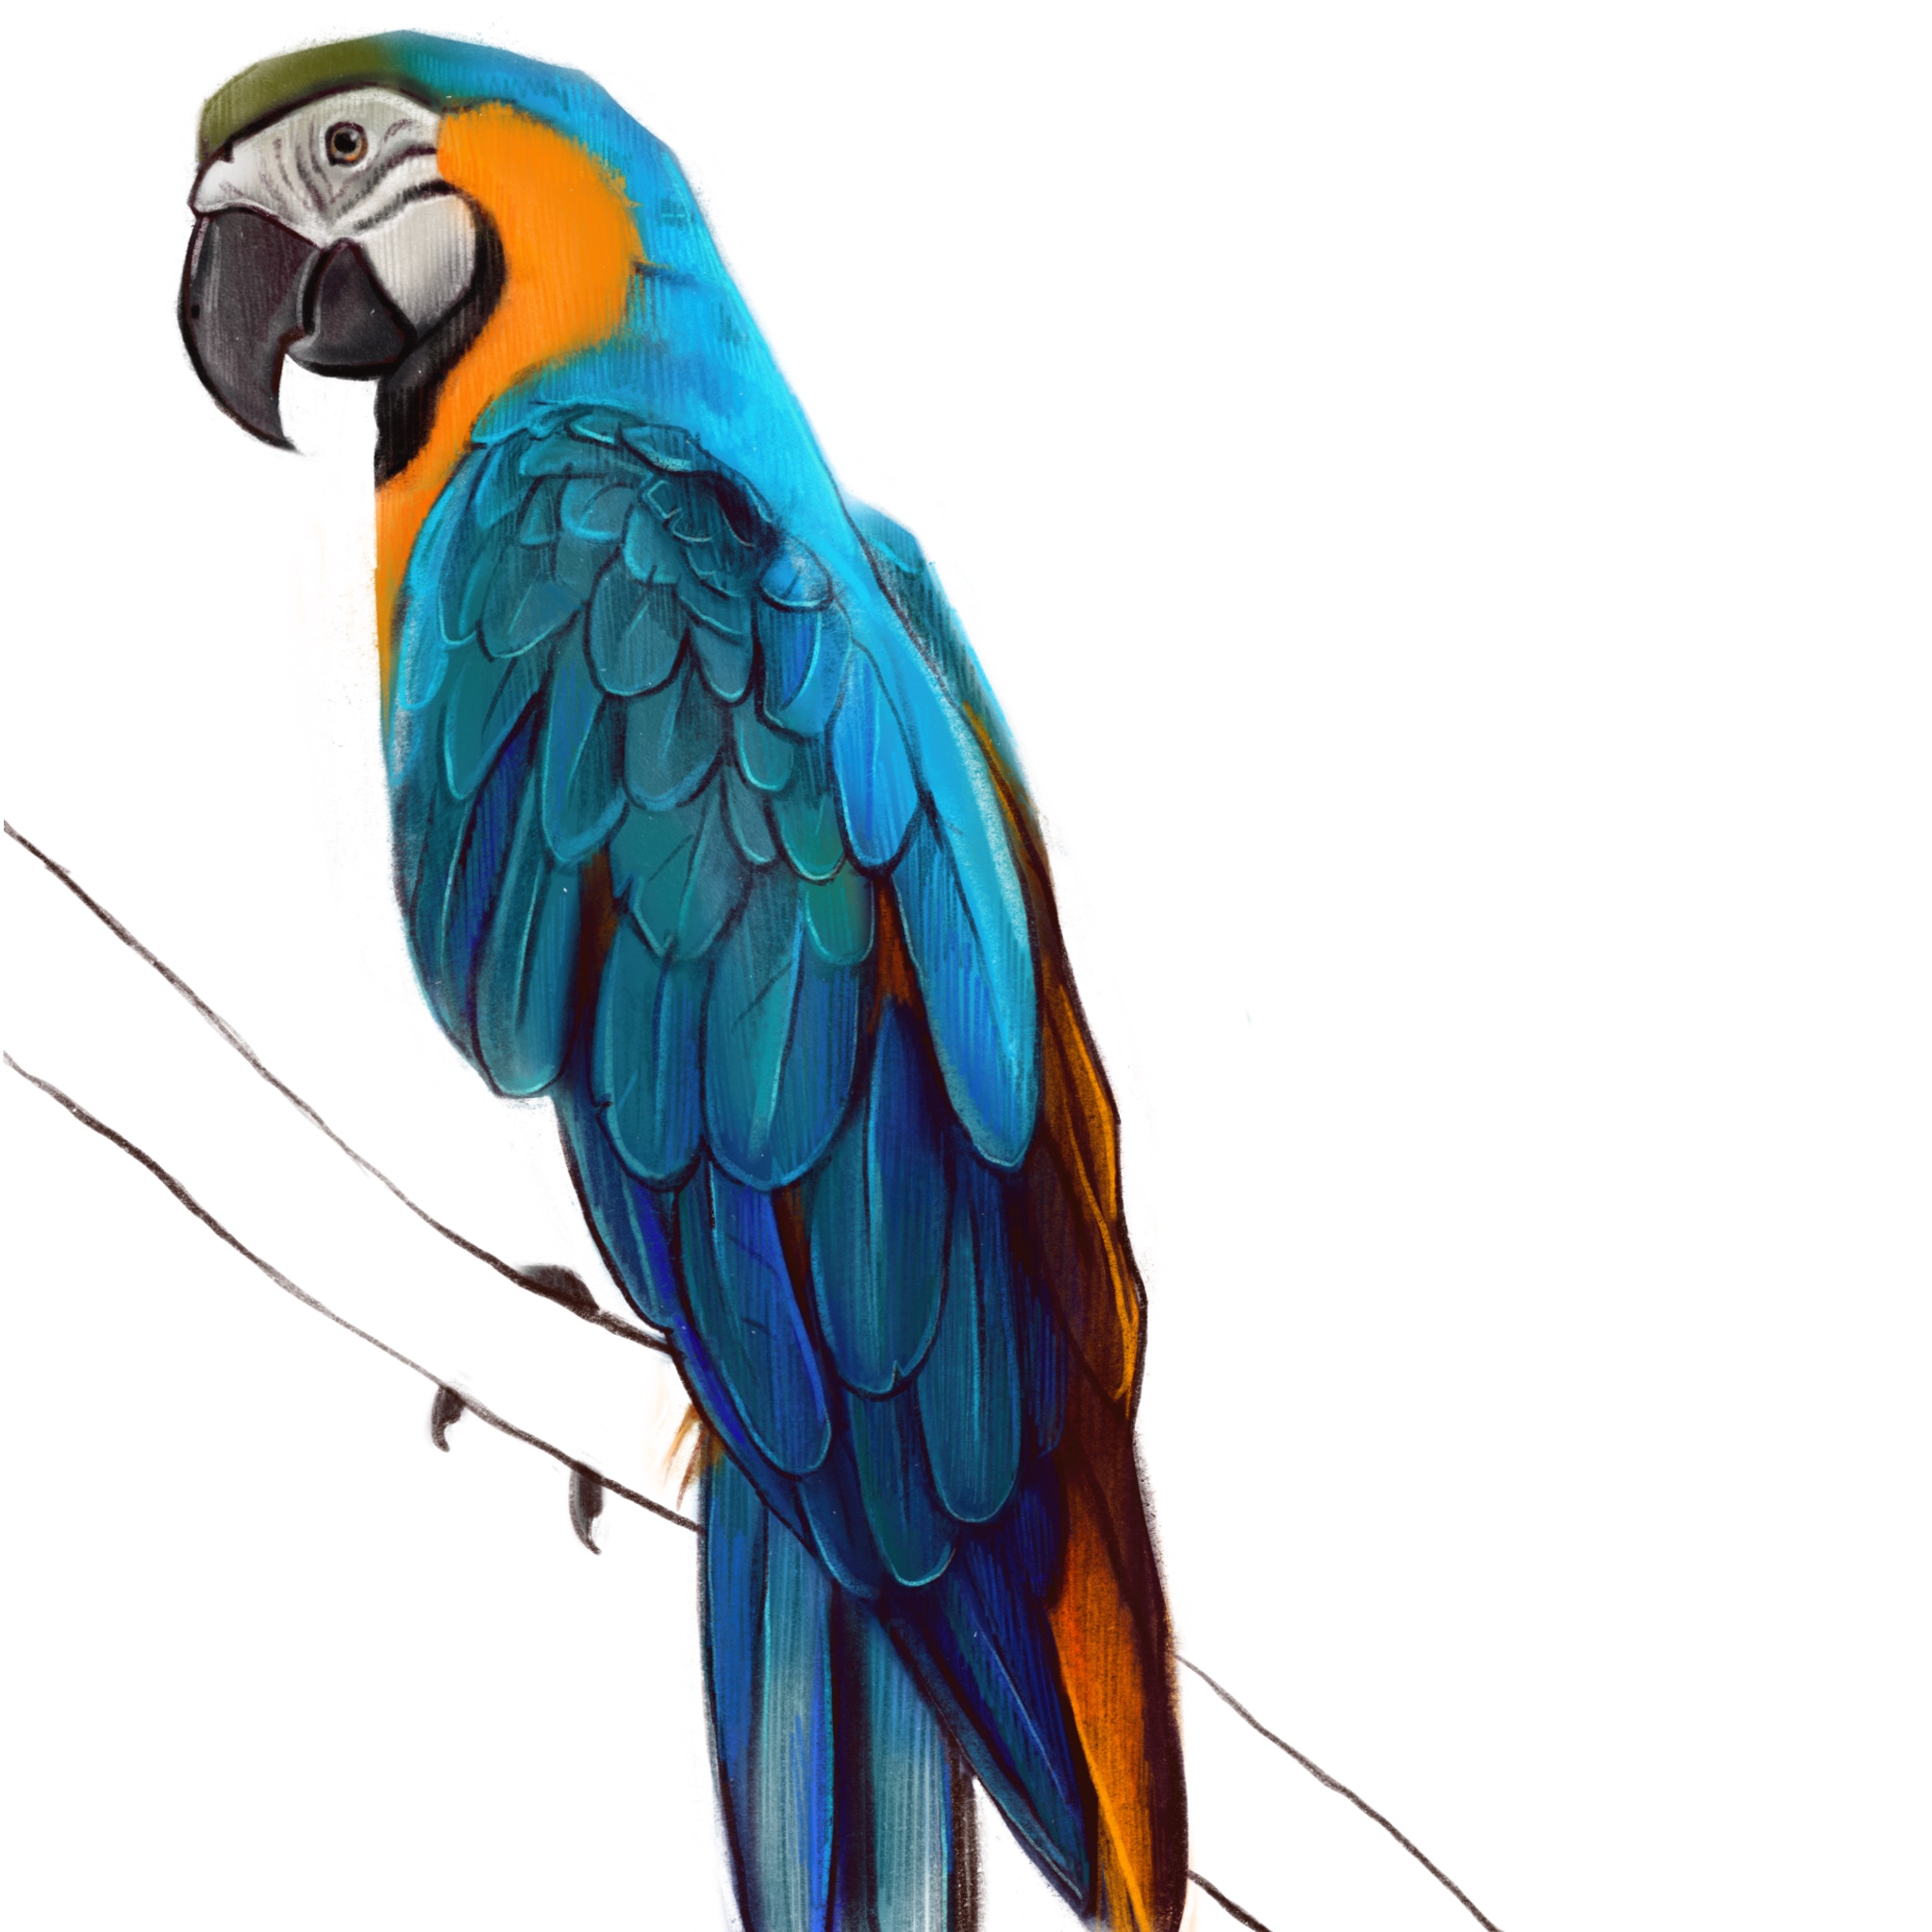 Parrot illustration